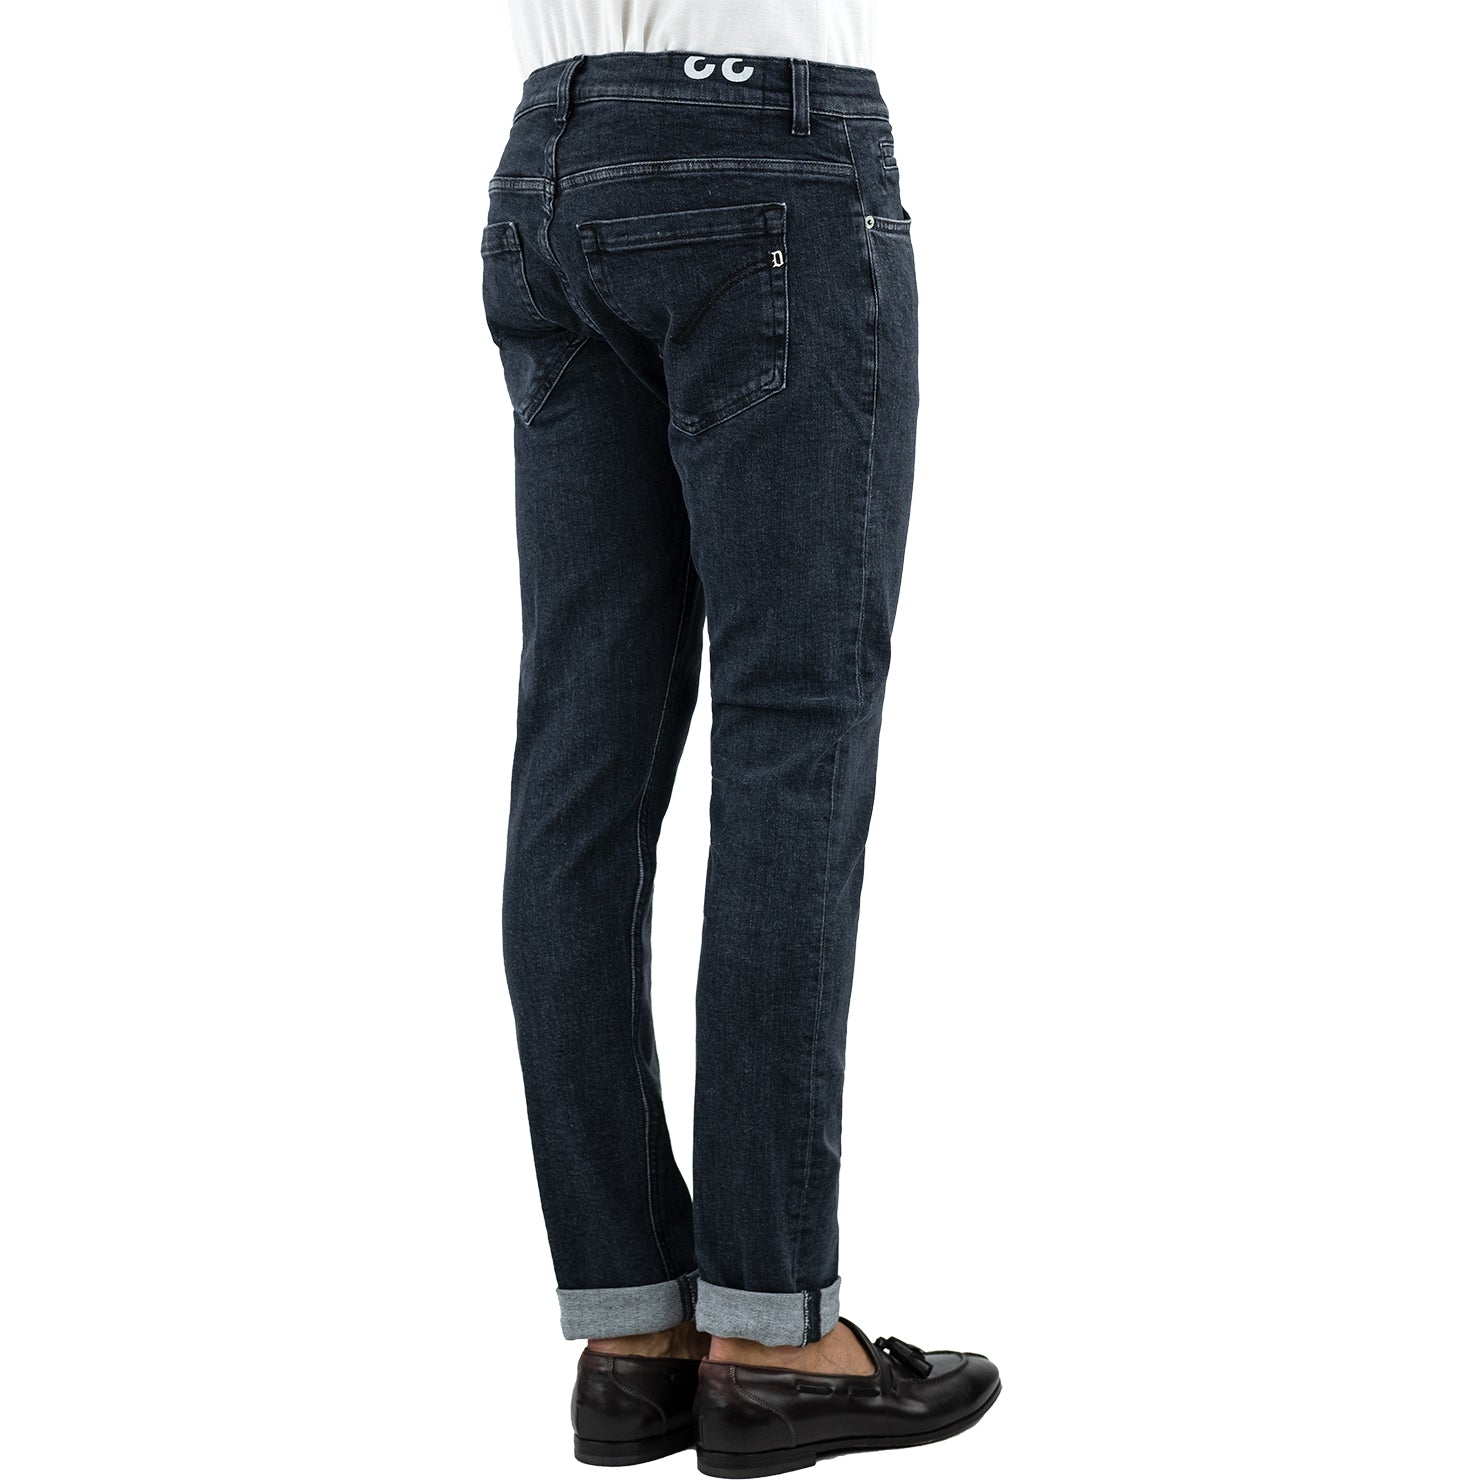 Jeans DONDUP George UP232 in Denim Stretch Organico Nero Lavato